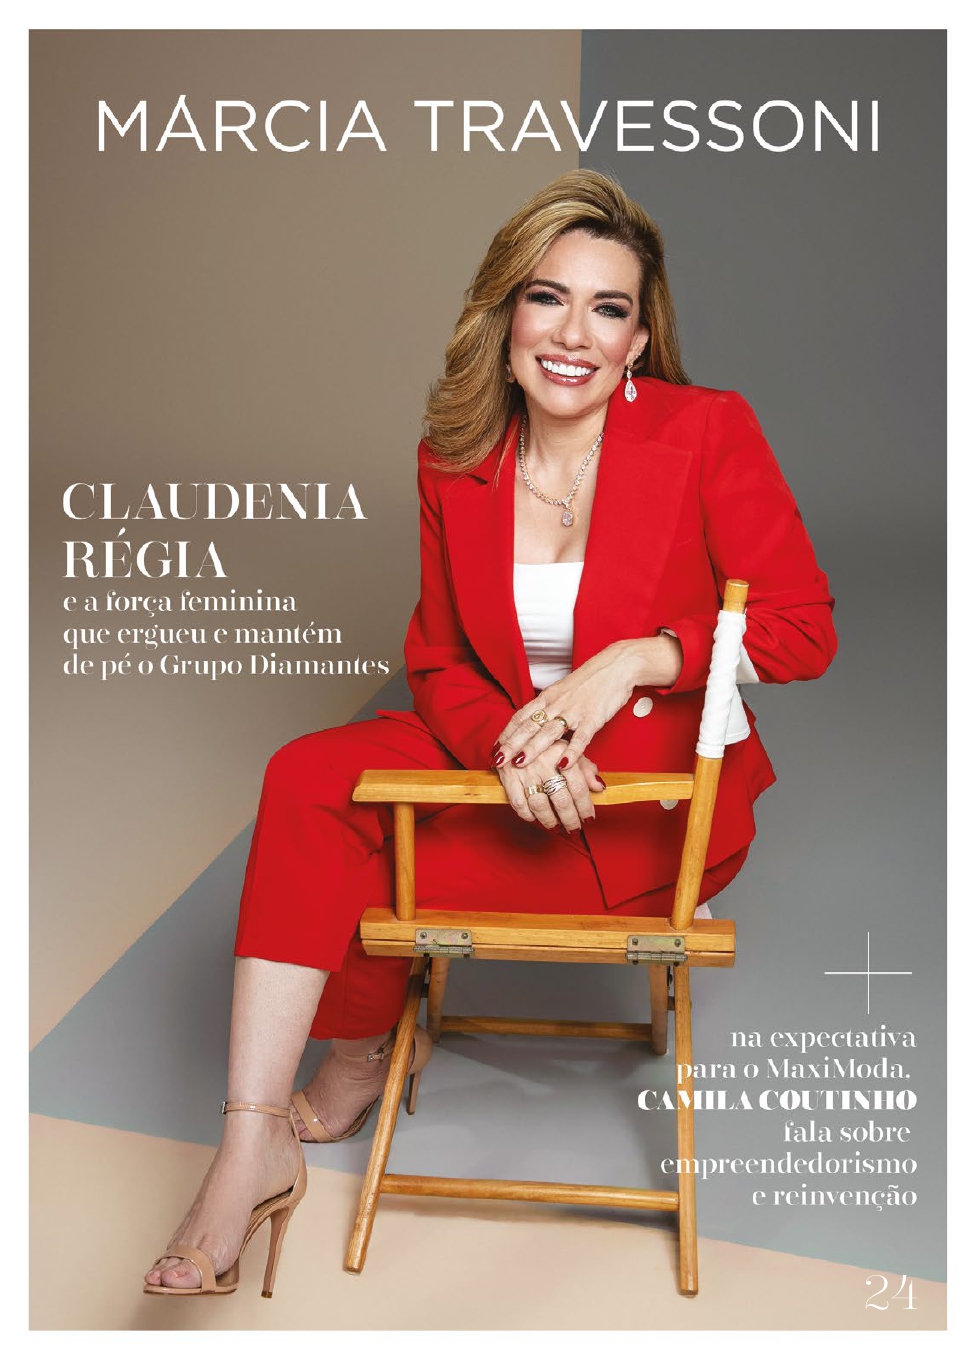 Revista Márcia Travessoni ed. 24: Claudenia Régia